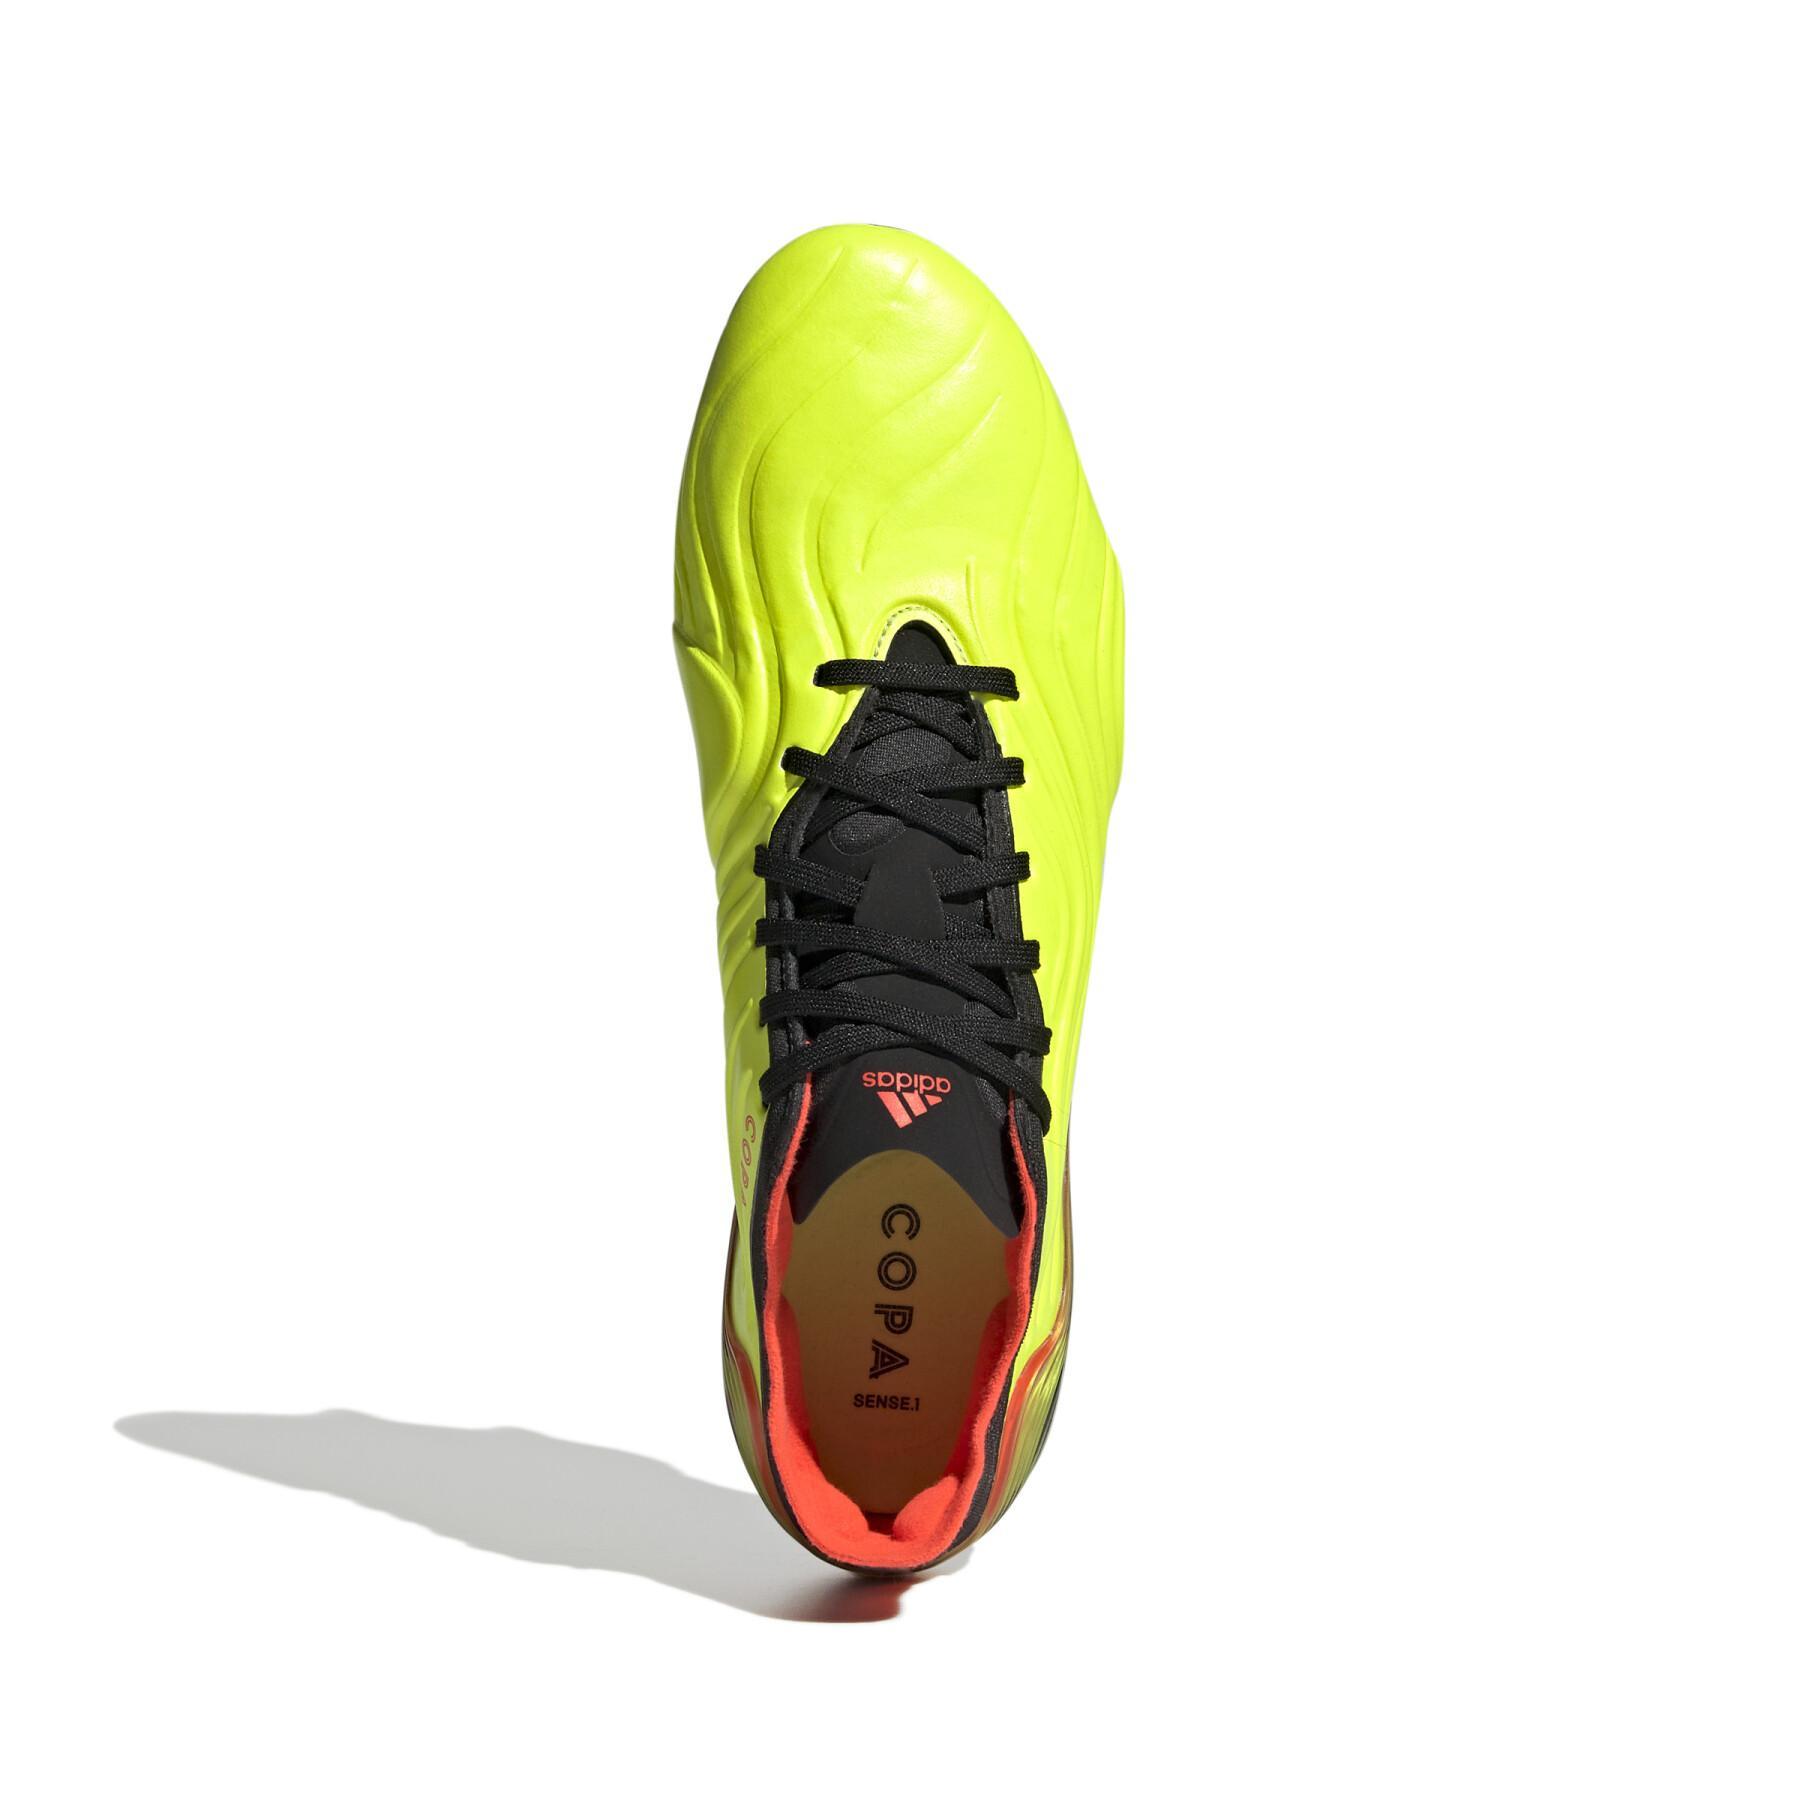 Soccer shoes adidas Copa Sense.1 SG